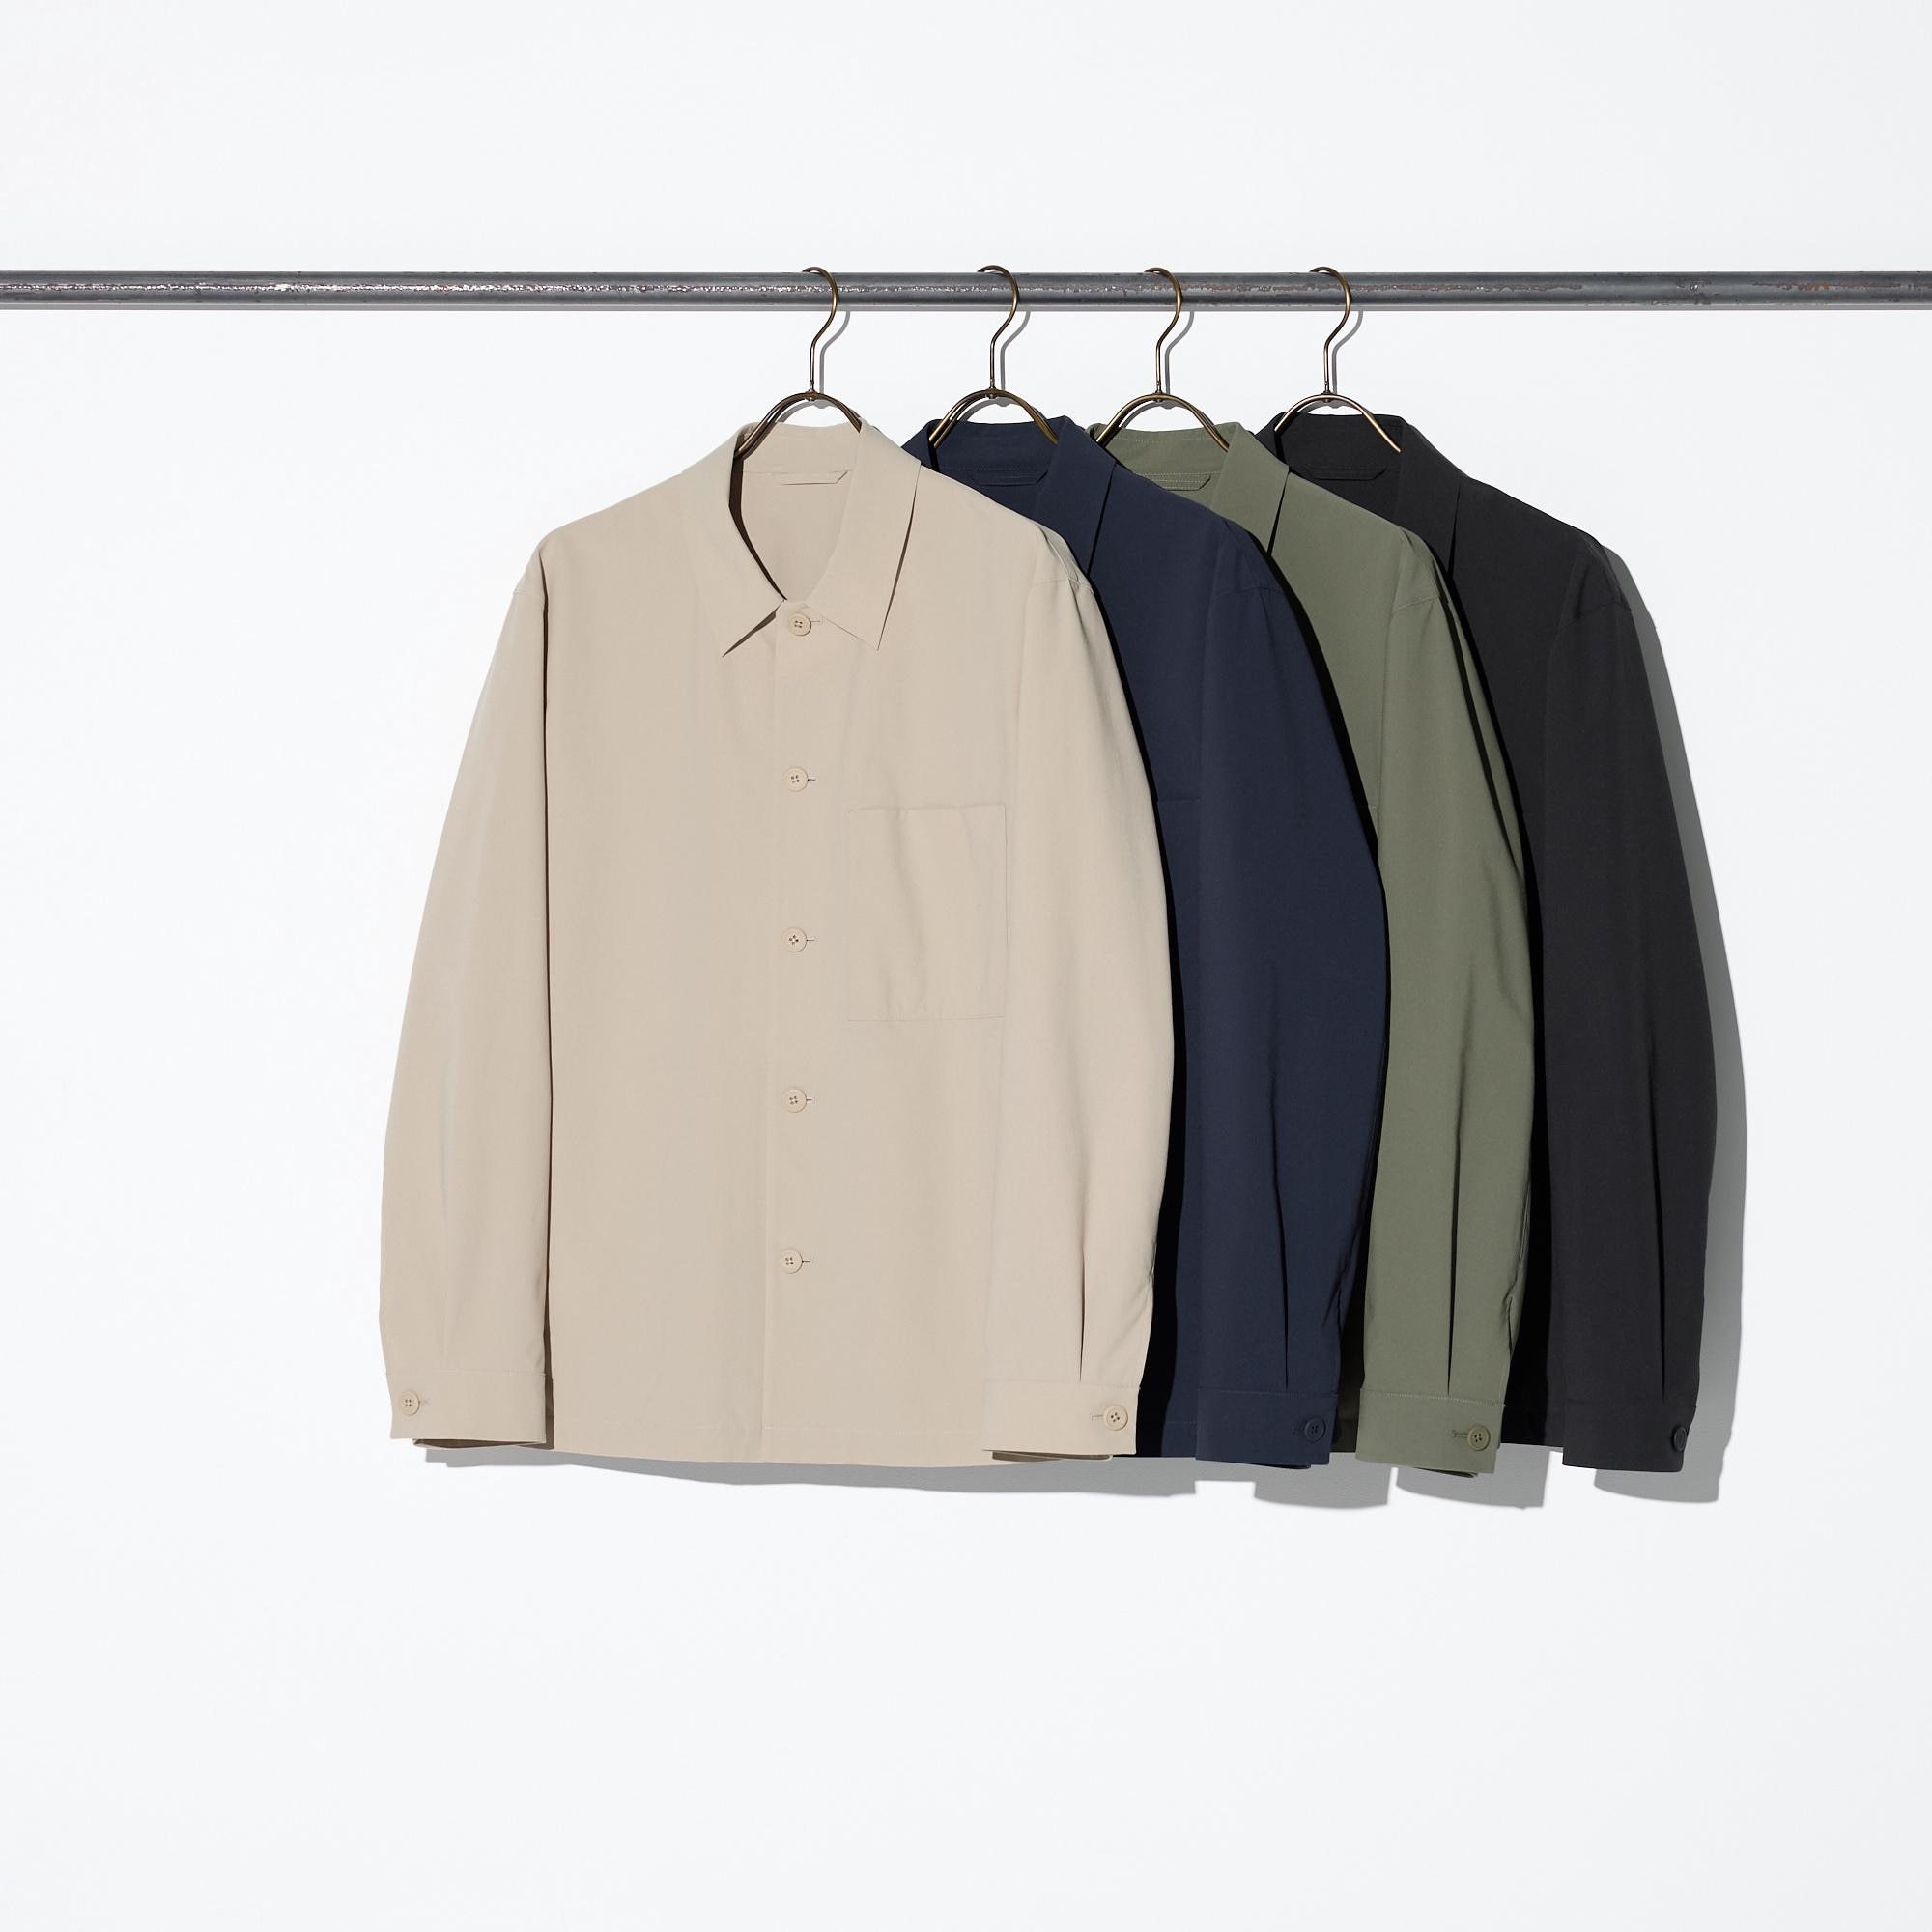 AirSense Shirt Jacket (Cotton-Like)